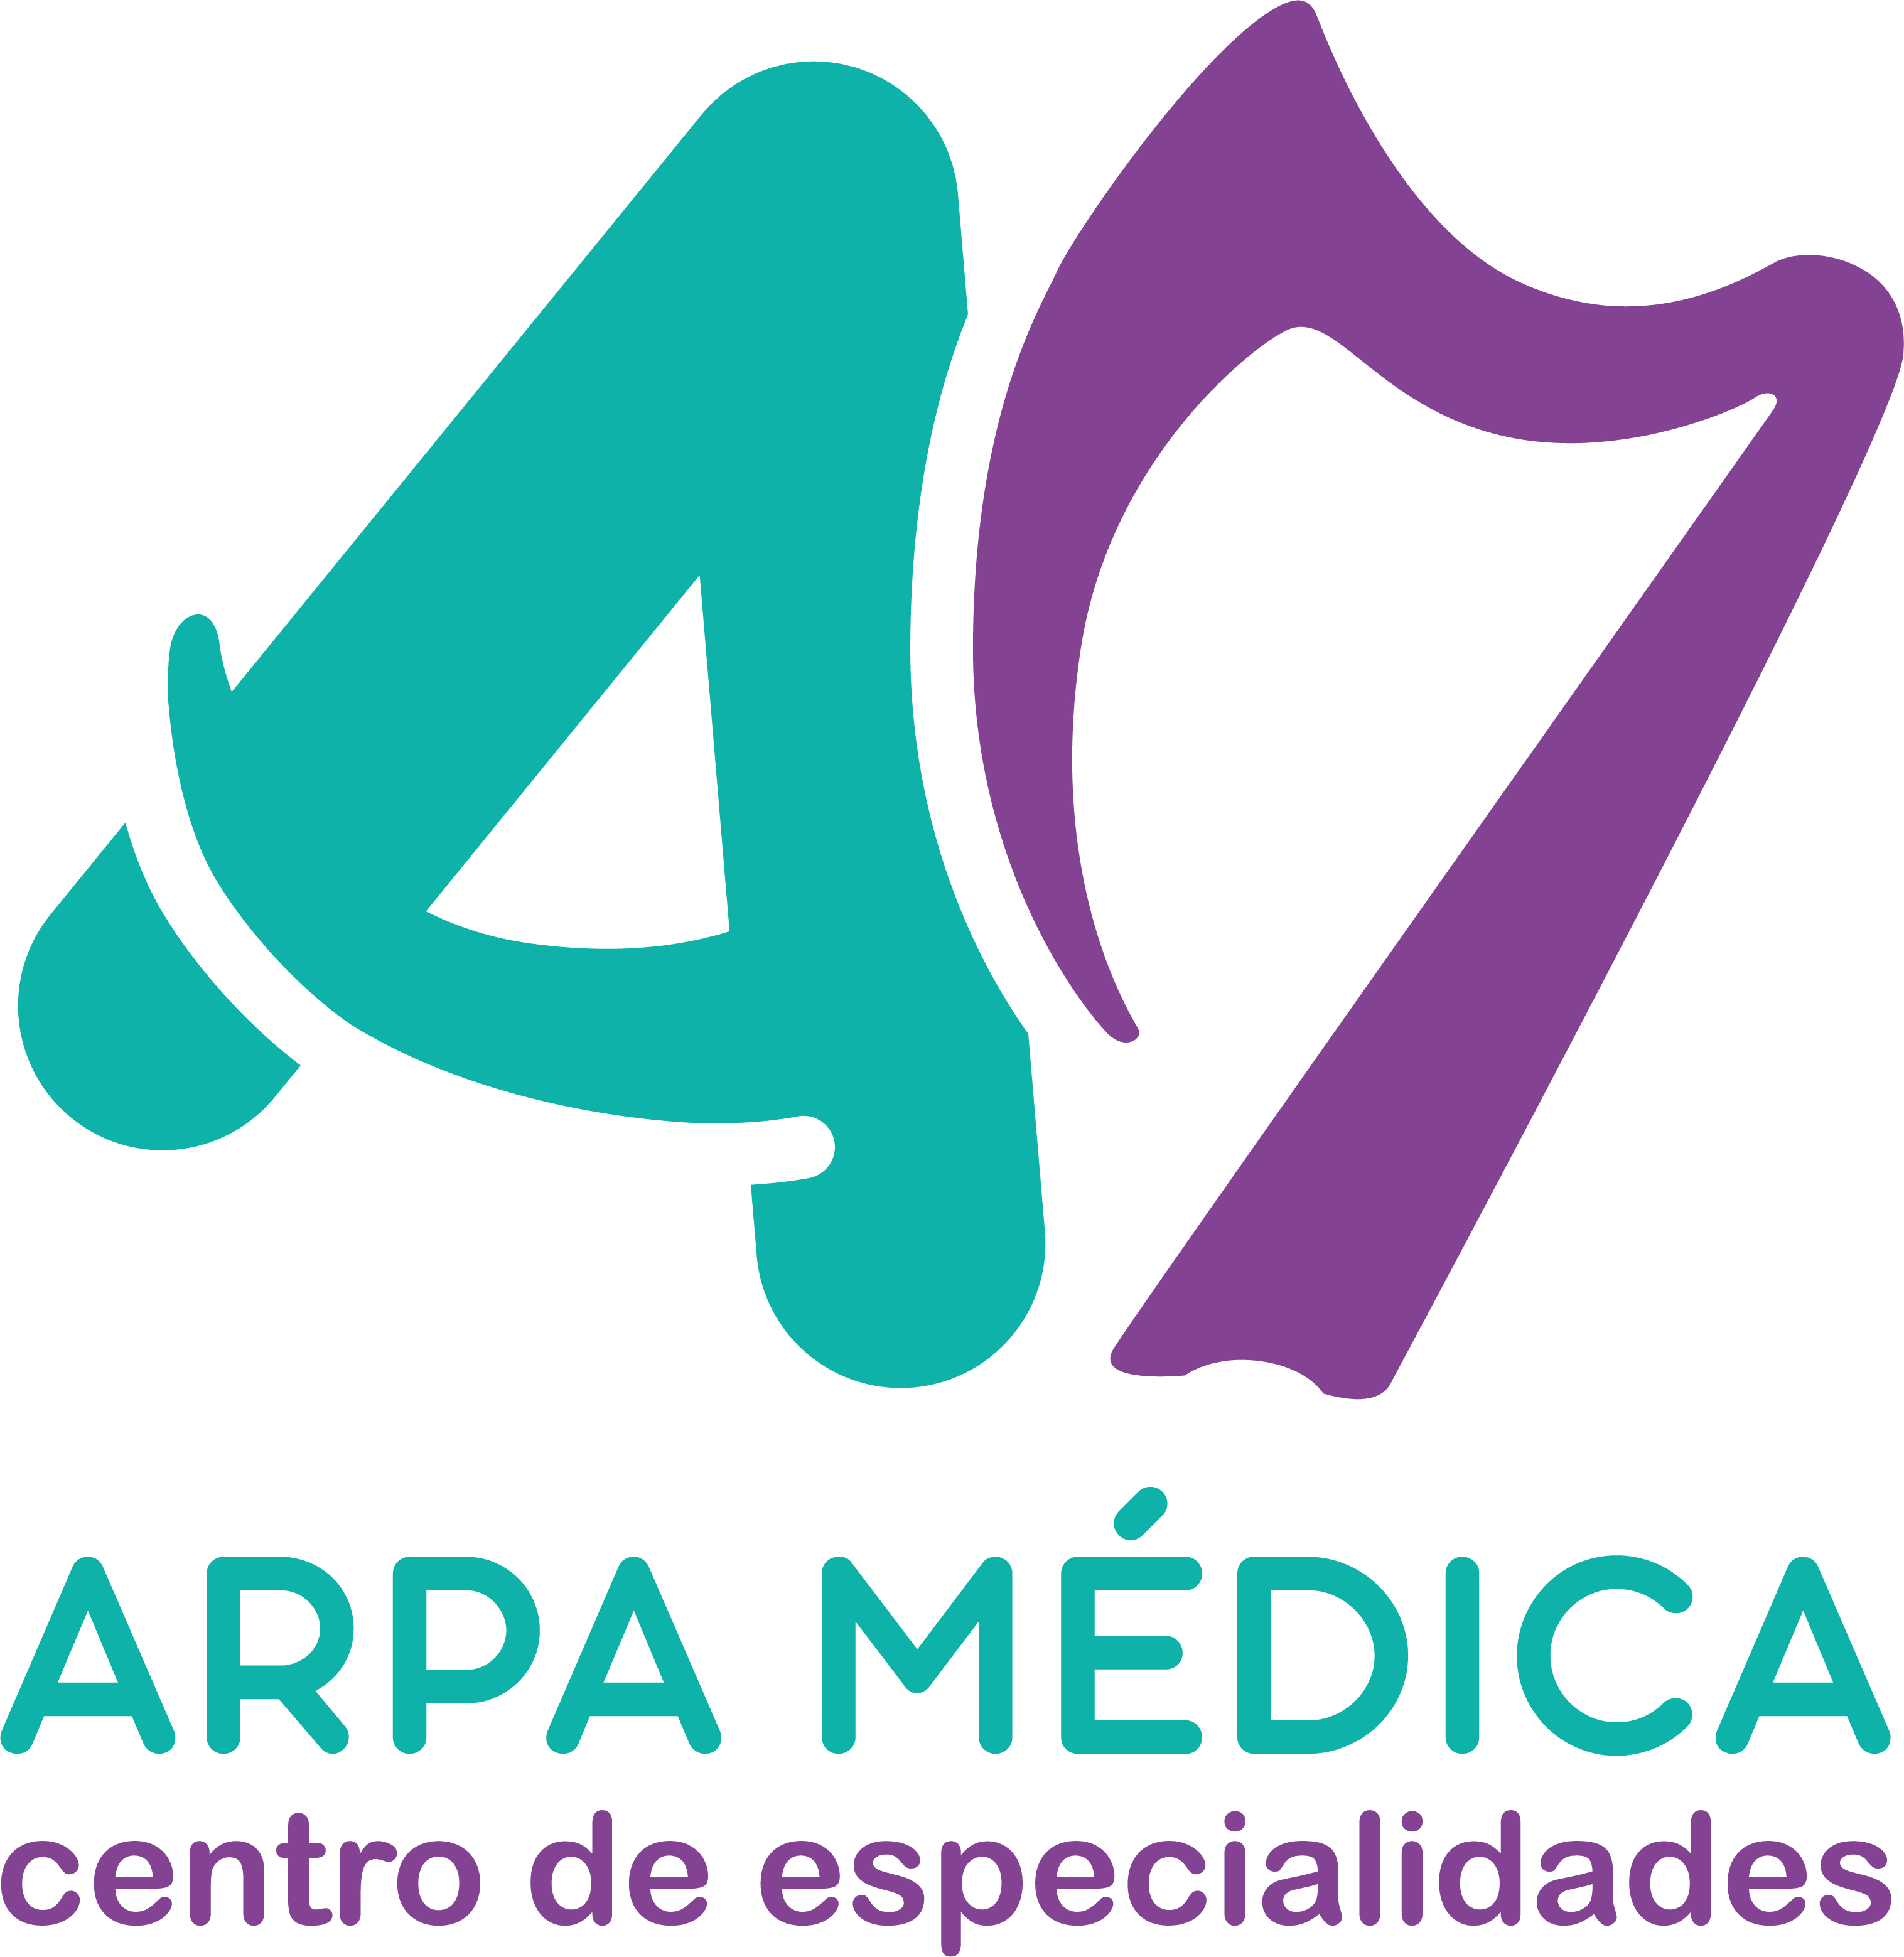 Logo_Agenda